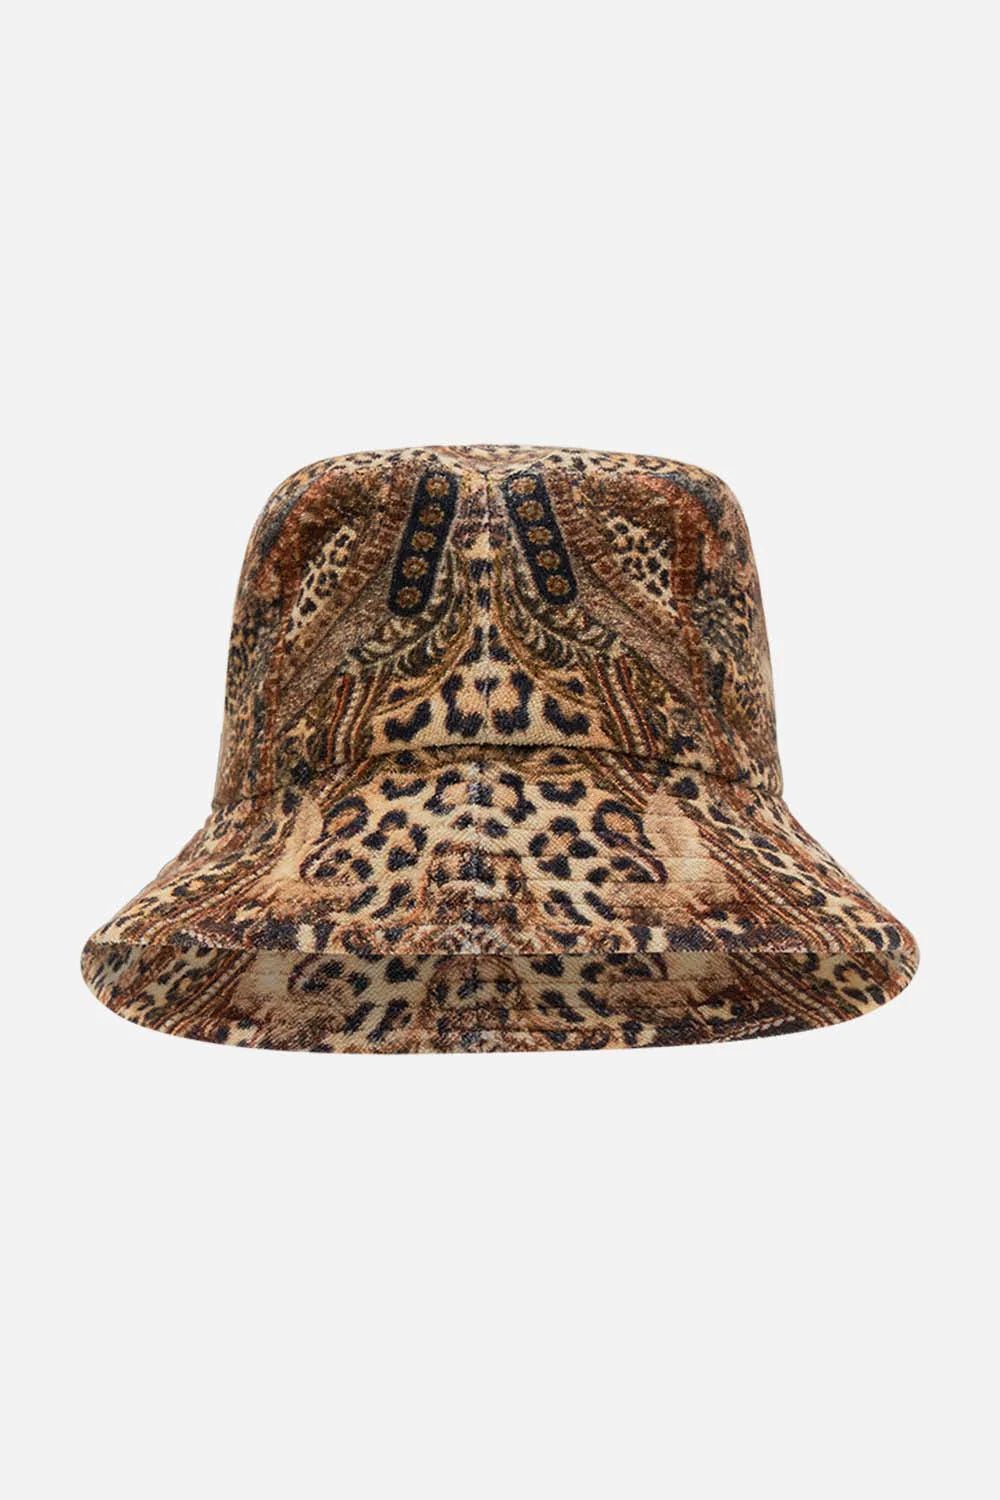 CAMILLA Terry Bucket Hat Standing Ovation - Pinkhill, Darwin boutique, Australian high end fashion, Darwin Fashion